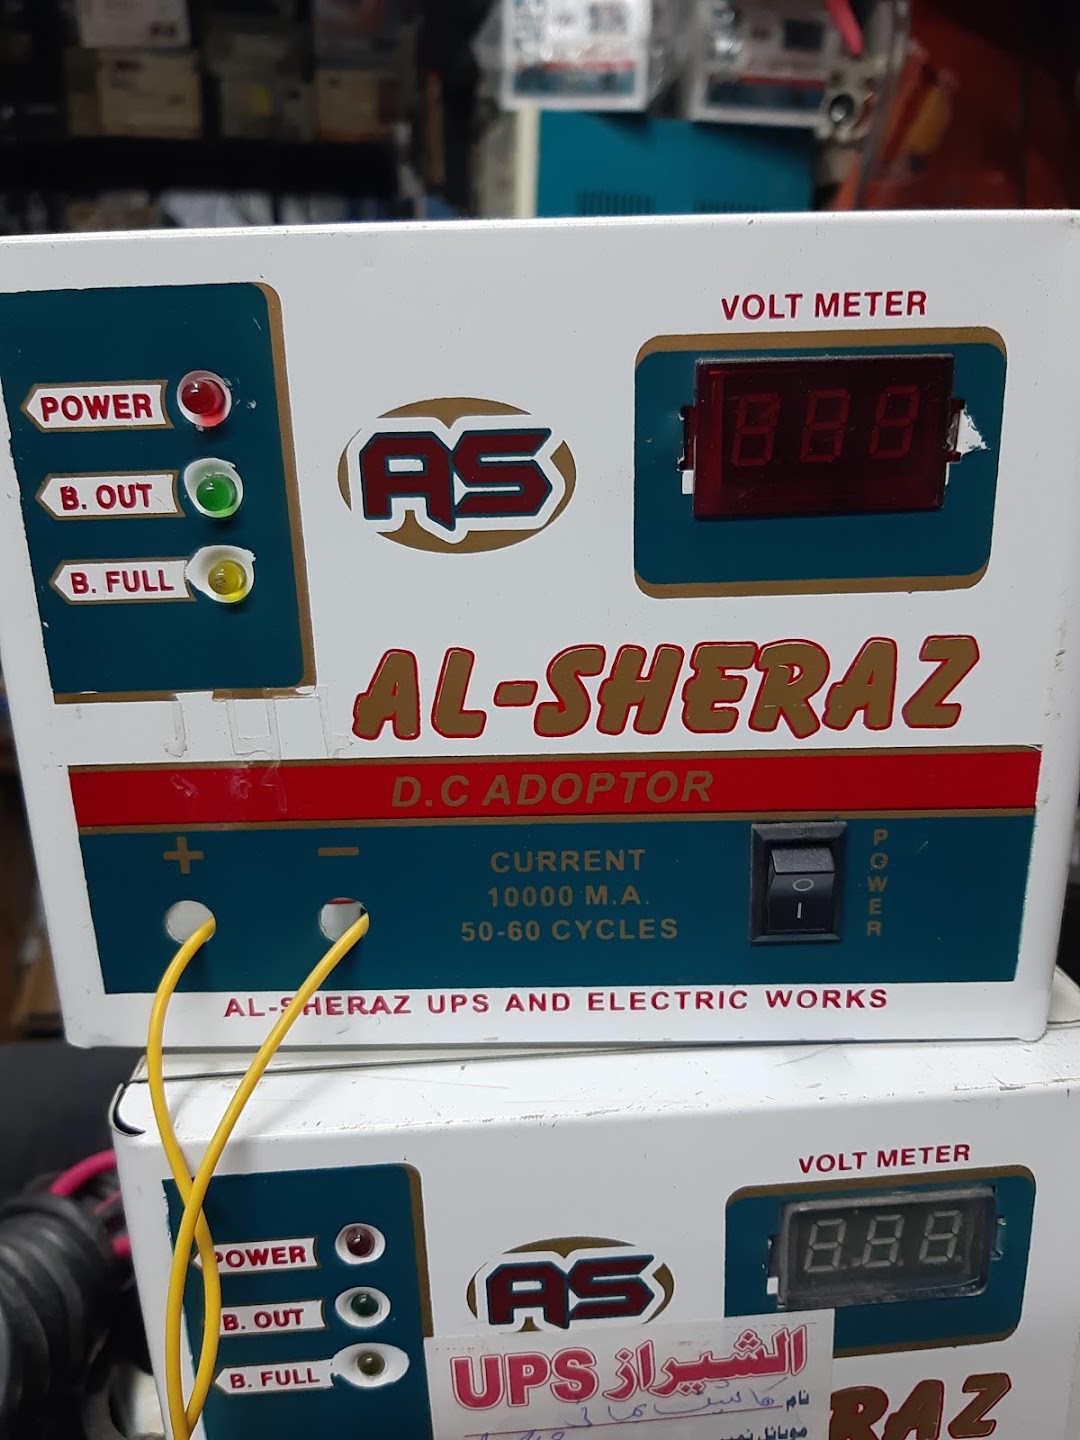 Al sheraz ups electronics